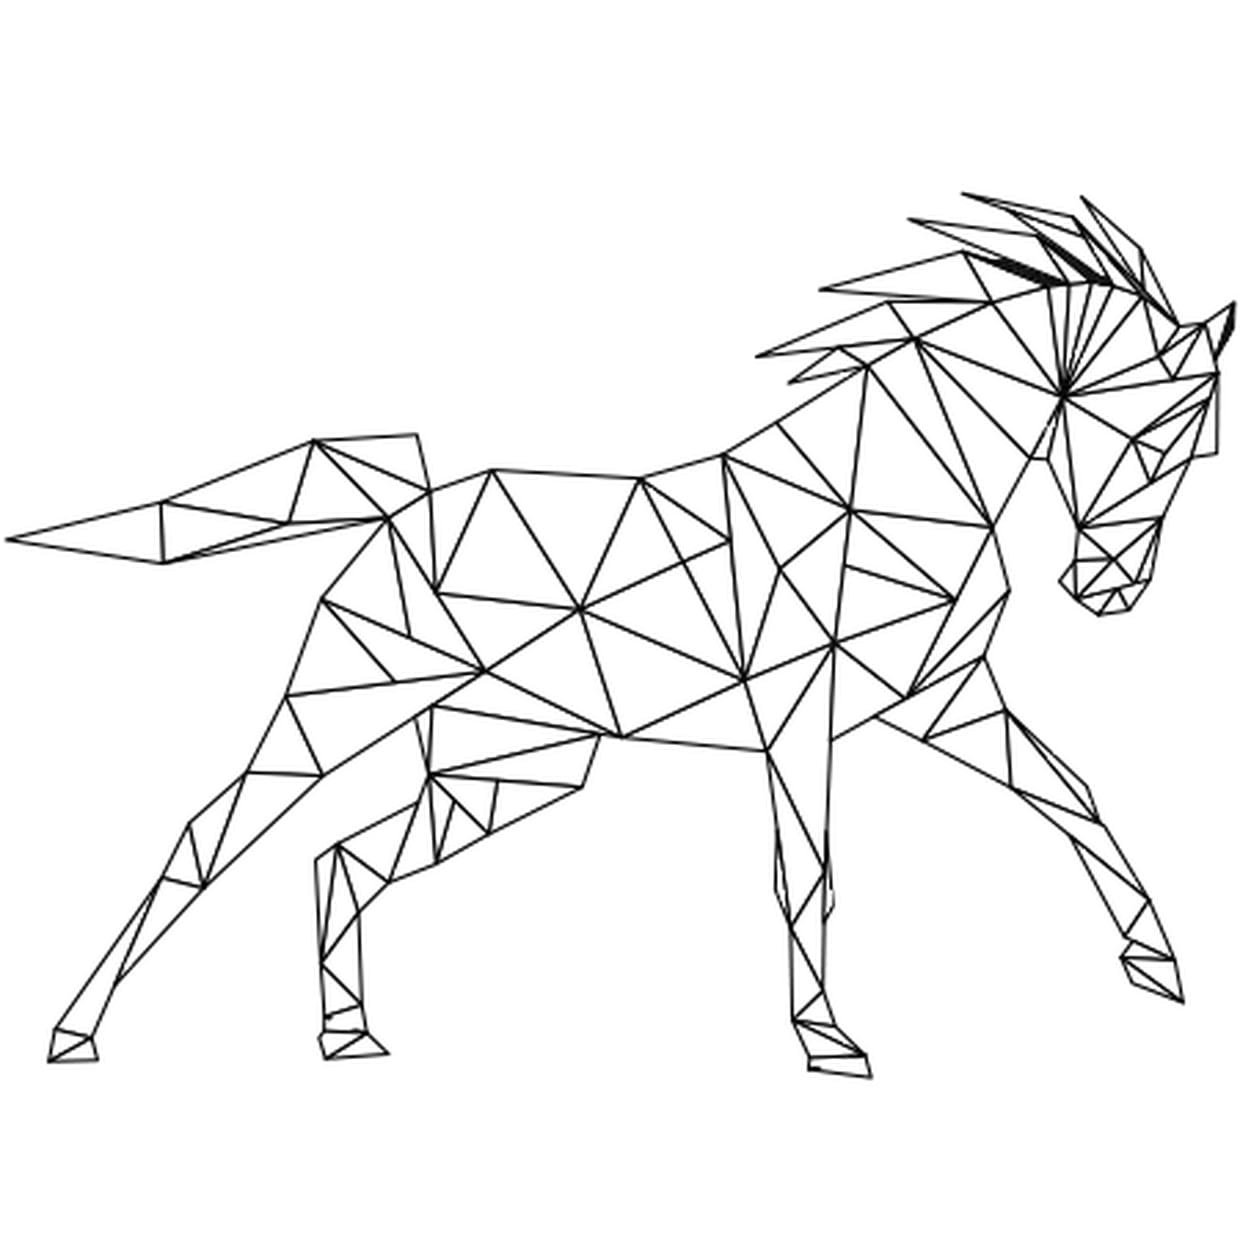 Лошадь из геометрических фигур